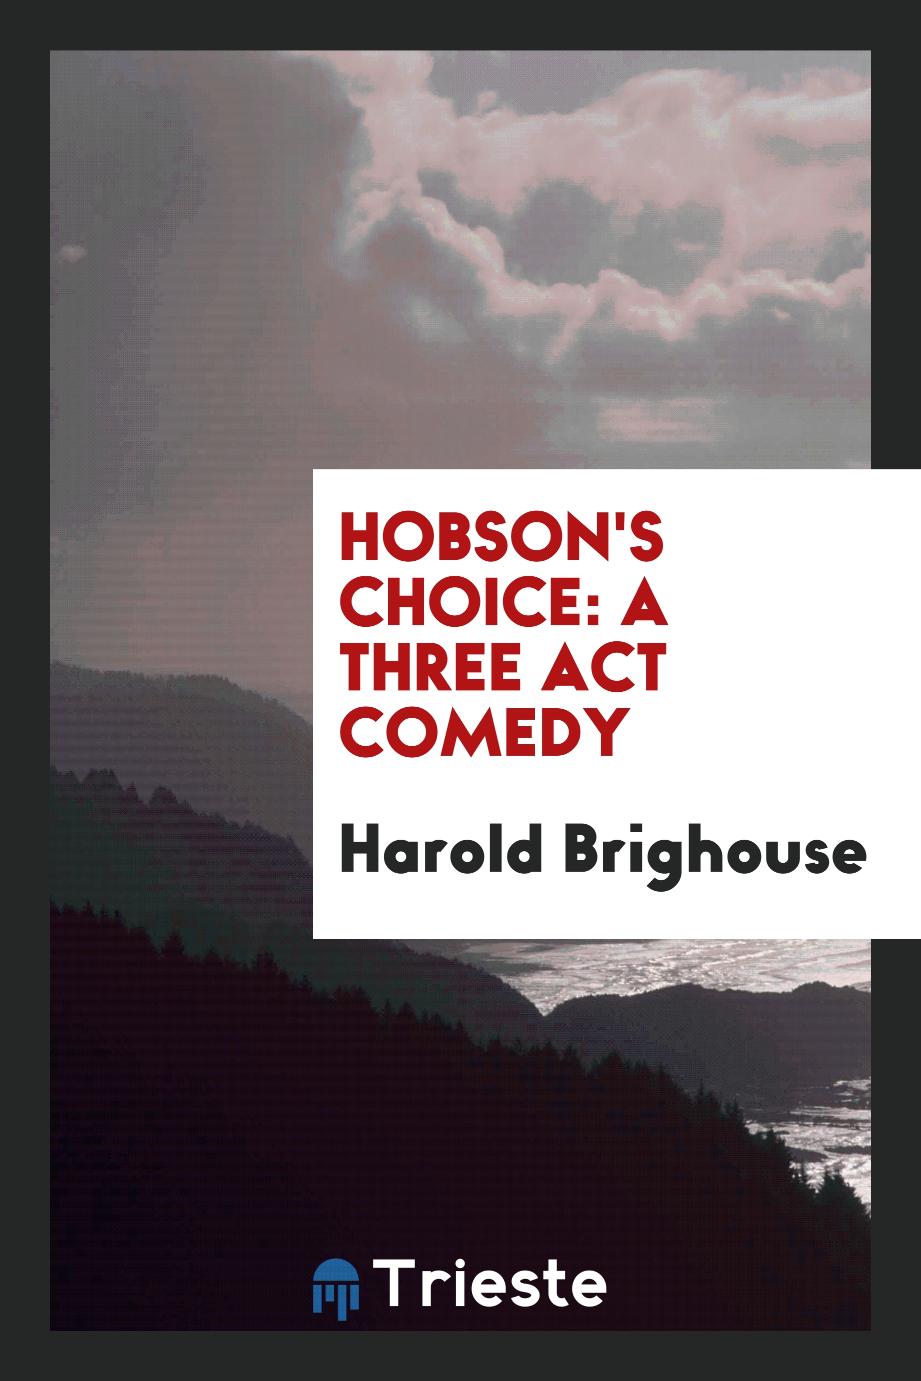 Hobson's choice: a three act comedy